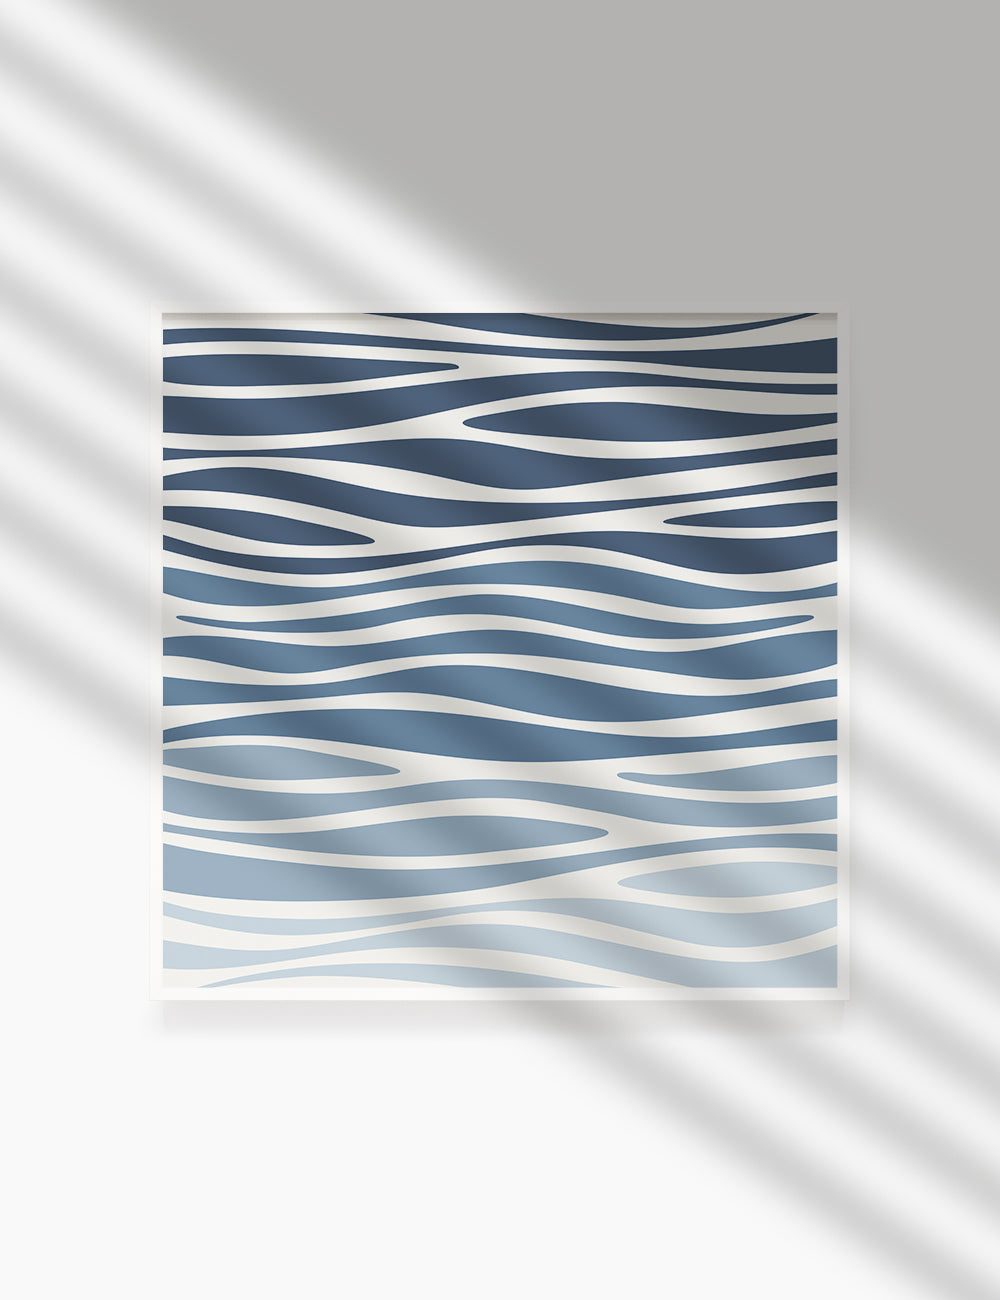 BLUE OCEAN WAVES. BOHO ART. Minimalist. Abstract. Printable Wall Art Illustration. - PAPER MOON Art & Design